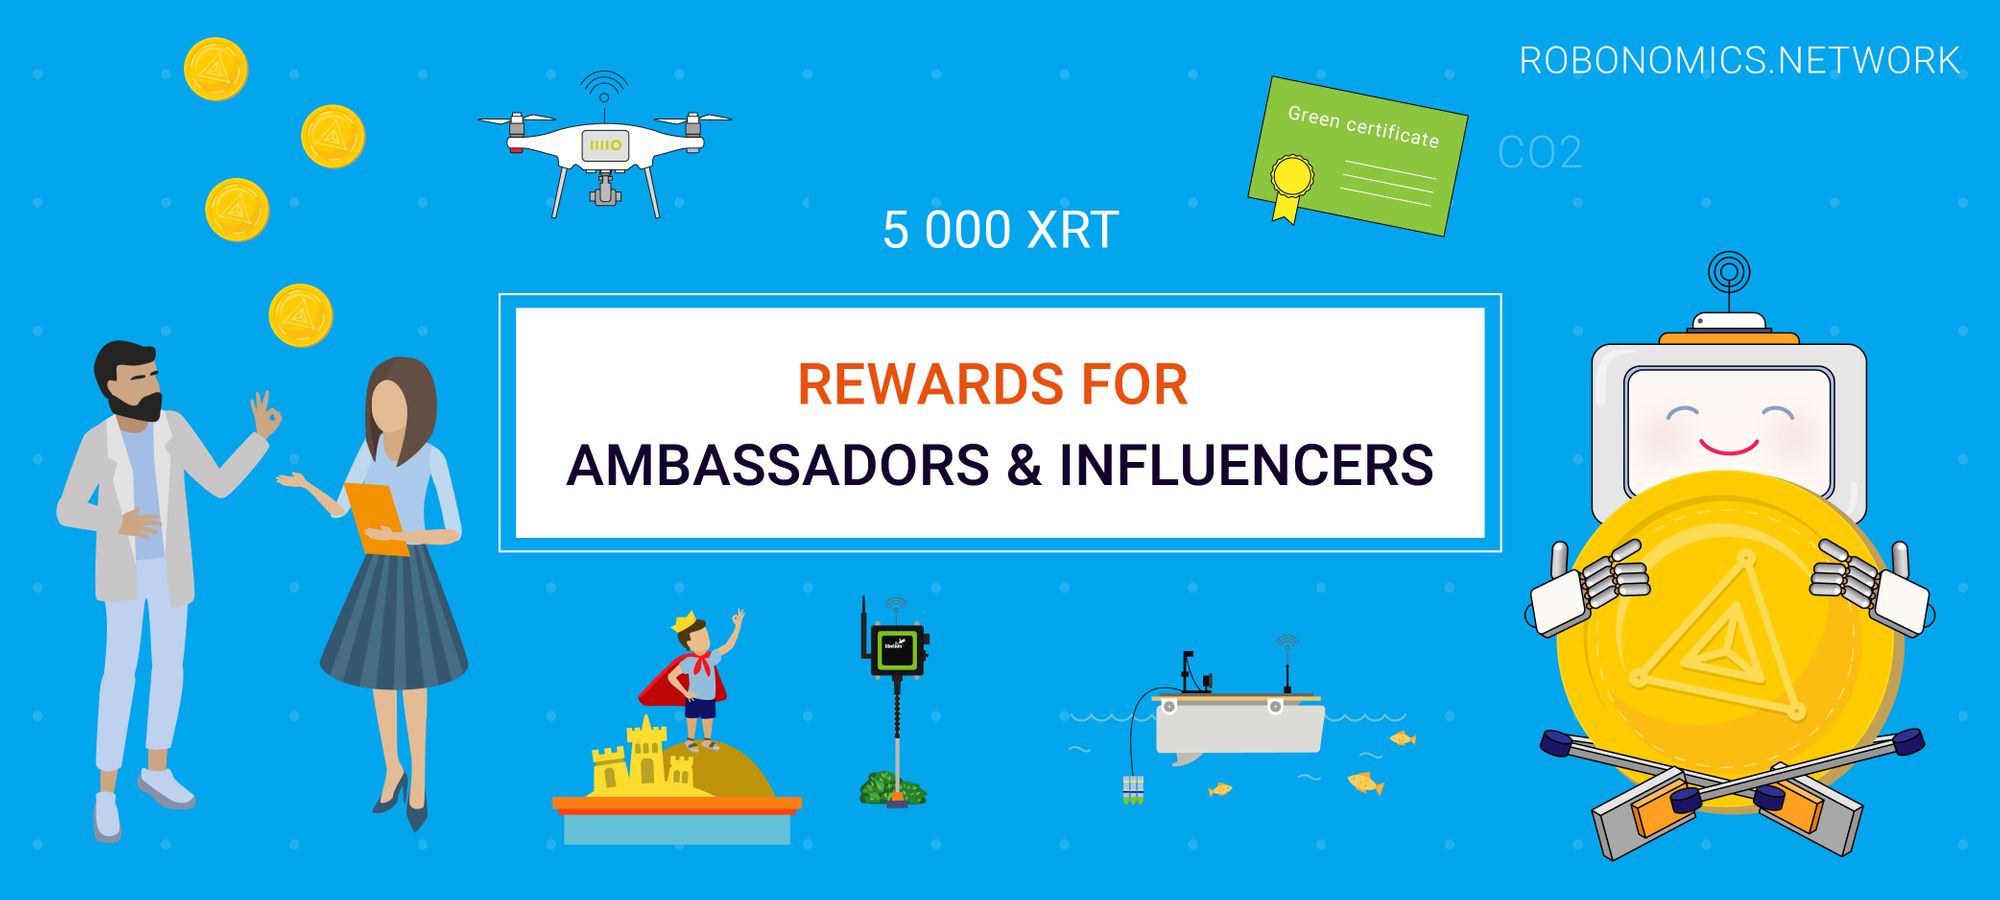 Rewards for Ambassadors & Influencers